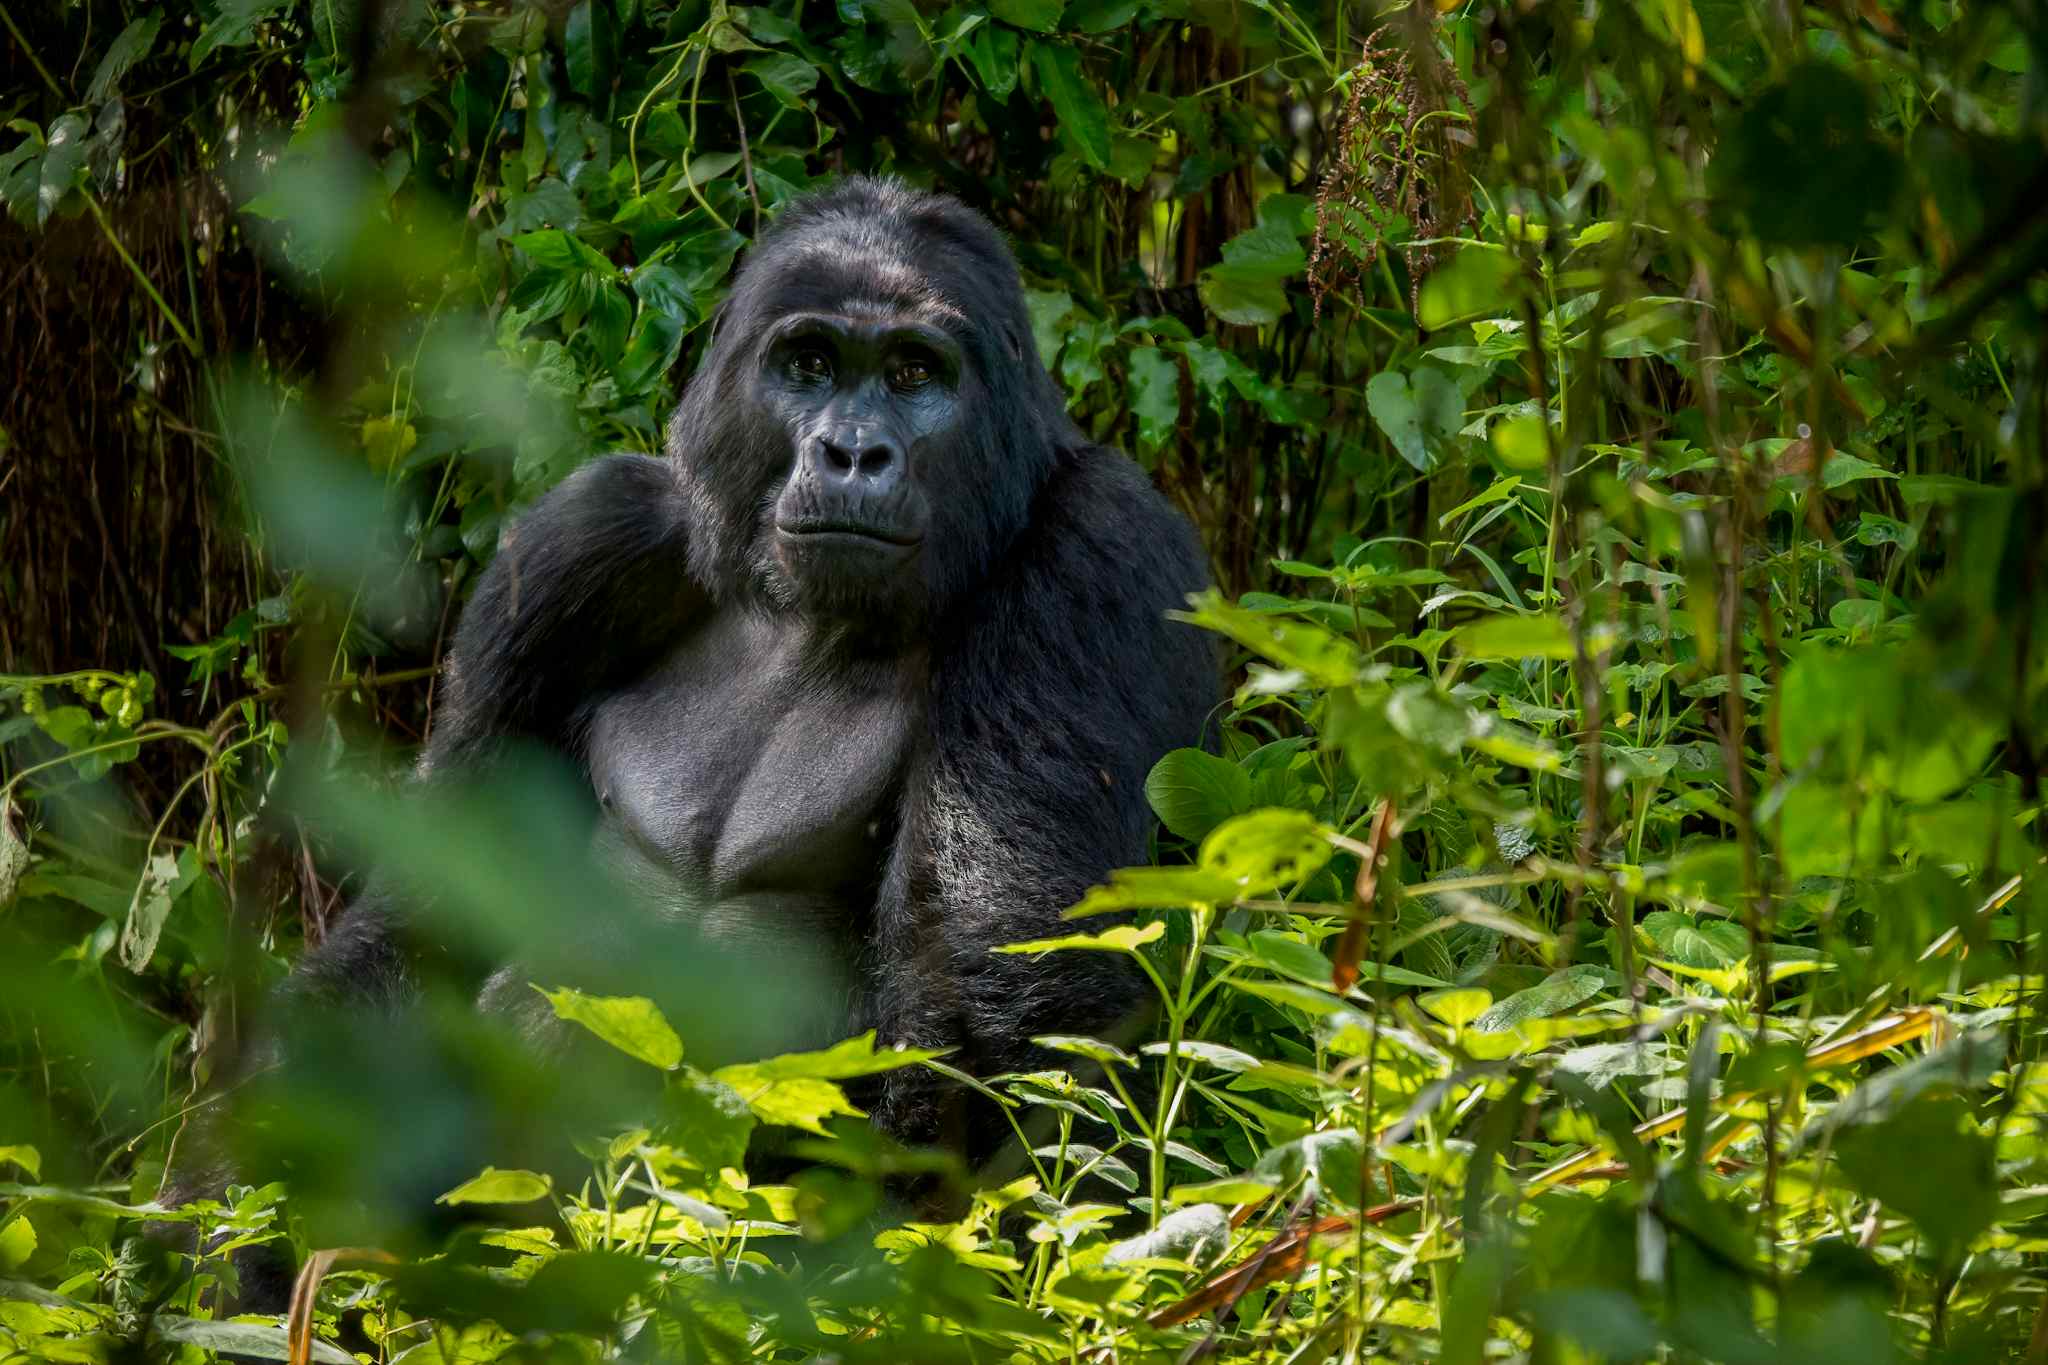 Gorilla, Uganda Bwindi forest
Getty: 1323786307